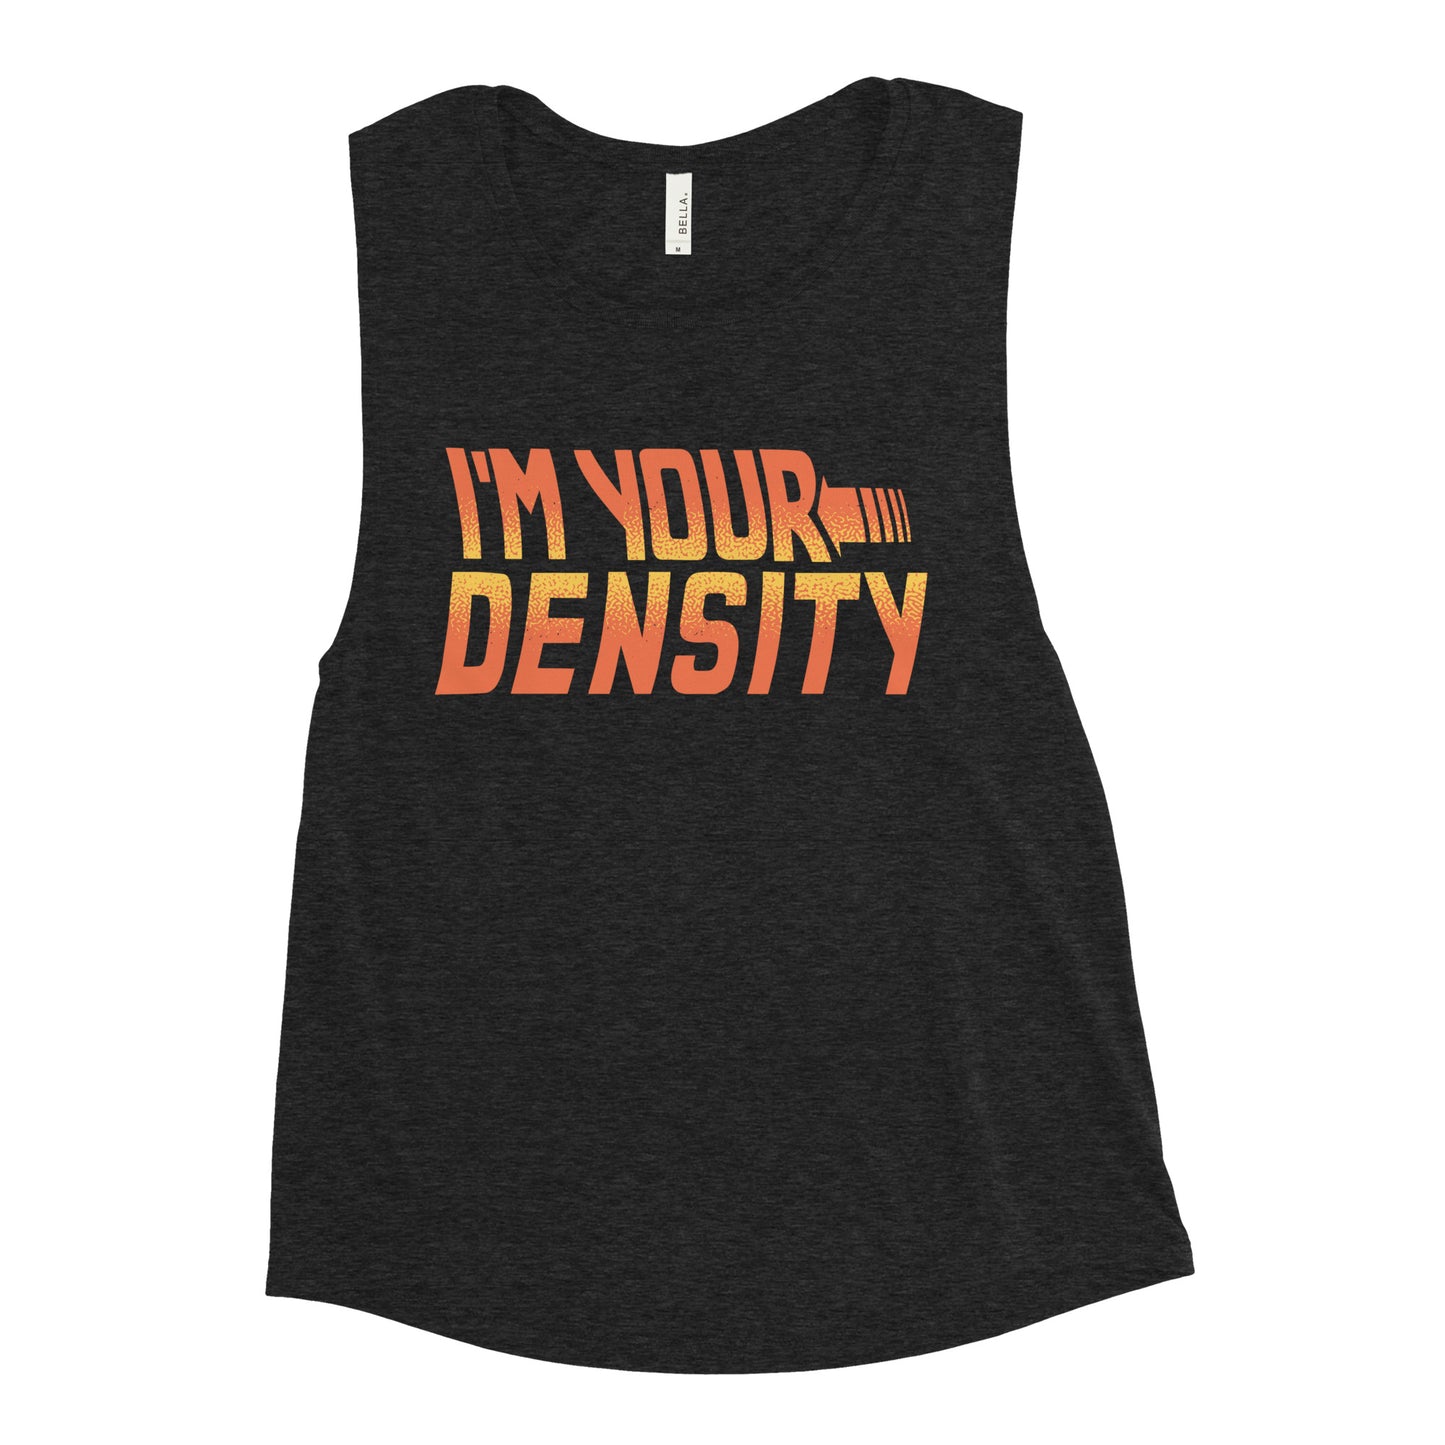 I'm Your Density Women's Muscle Tank